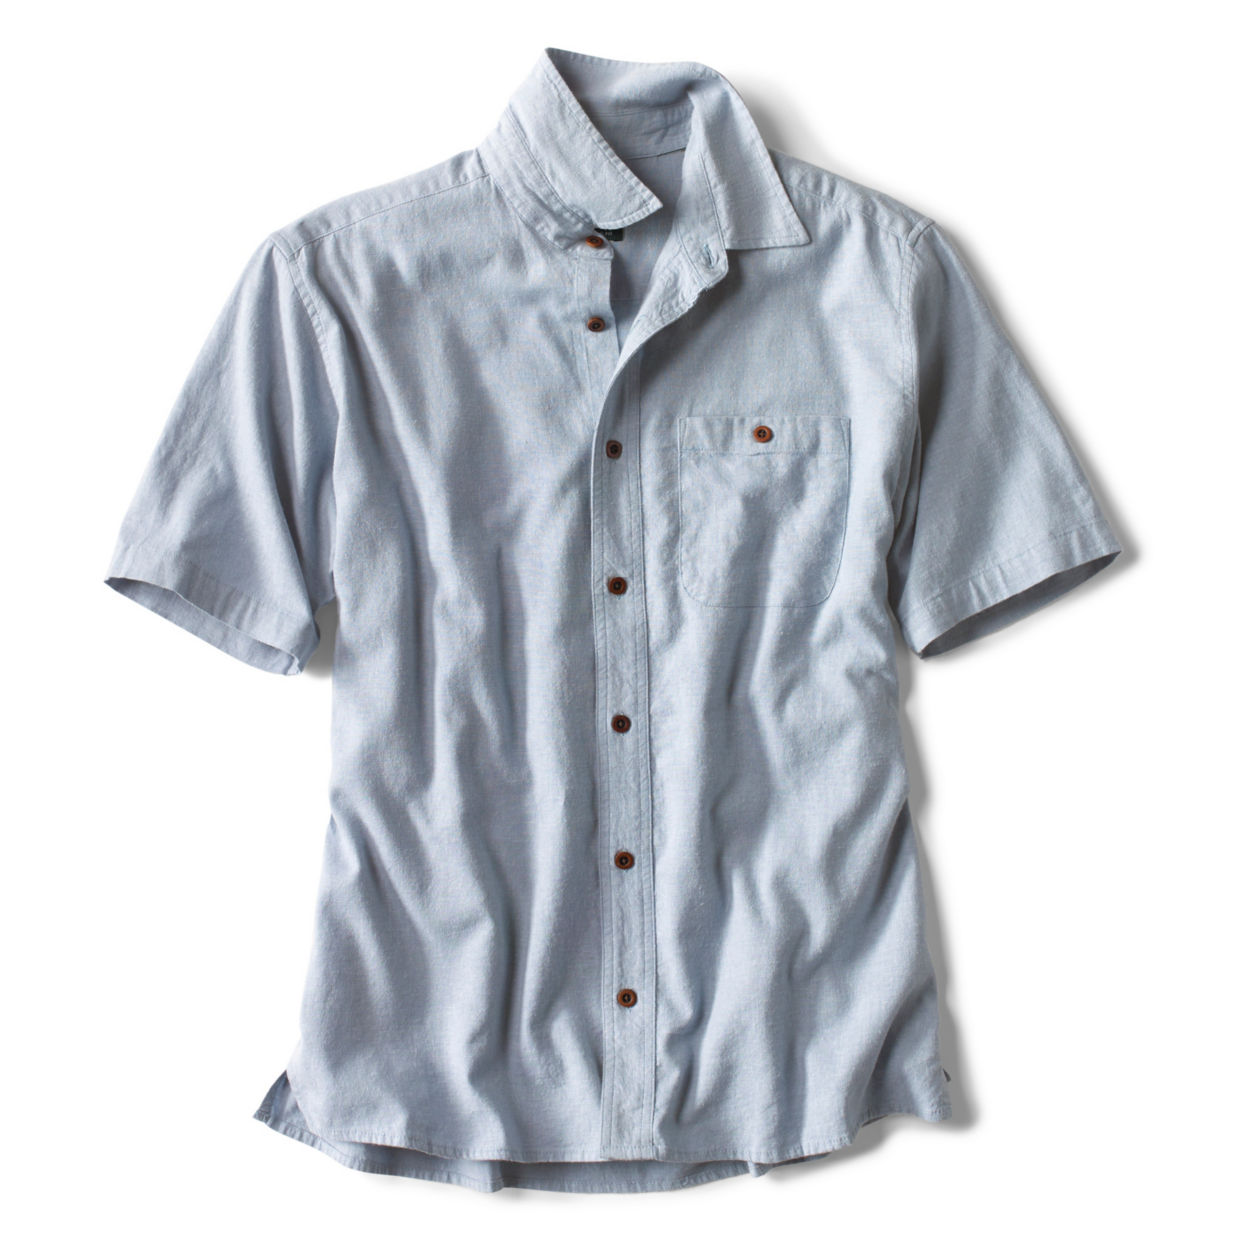 Men's Hemp/TENCEL Stretch Short-Sleeved Shirt Blue/Grey Size Medium Hemp/Tencel/Lyocell Orvis